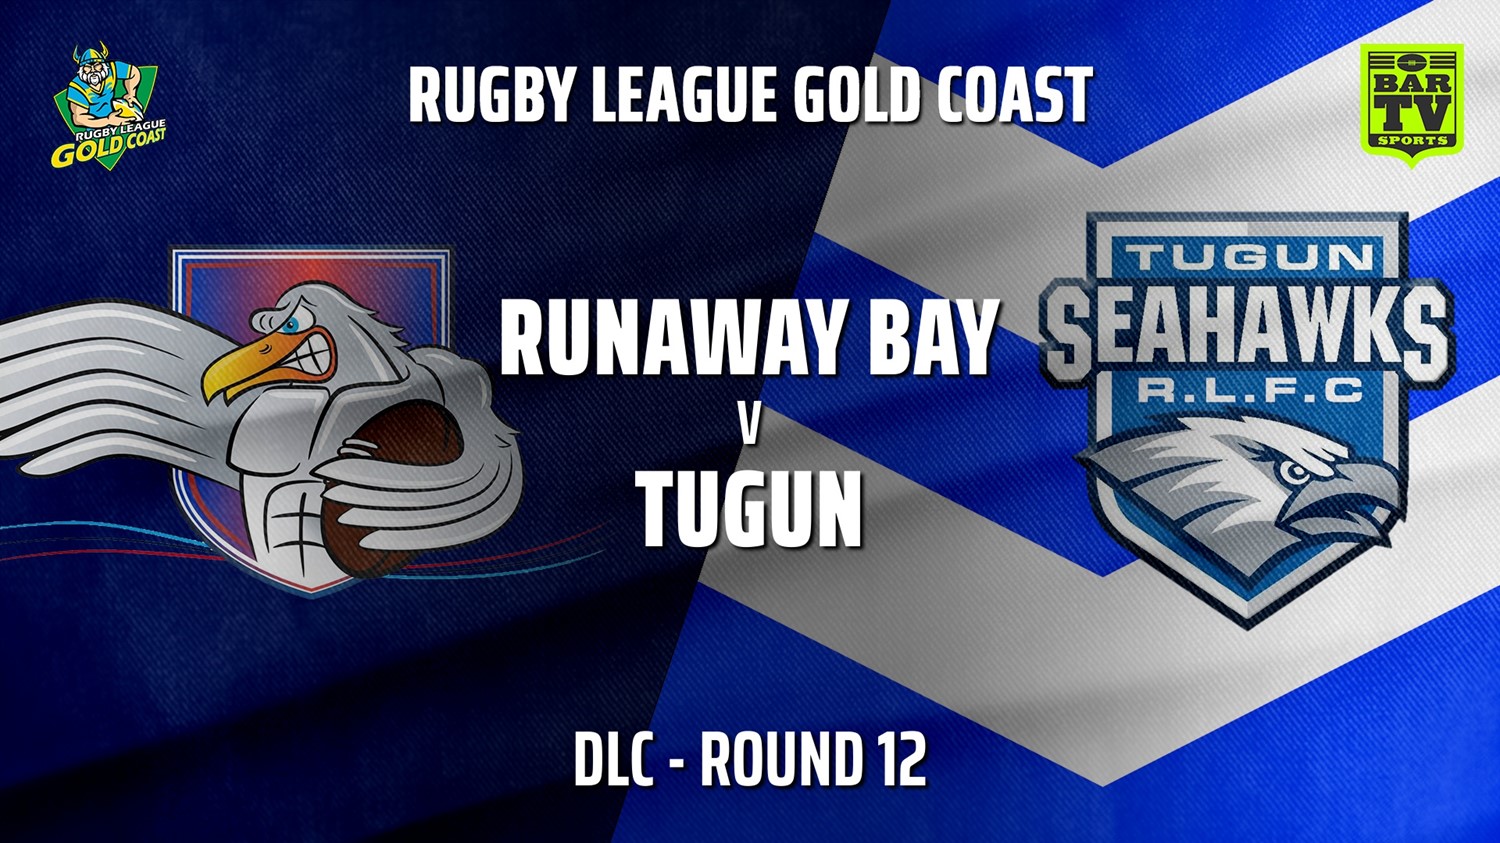 210718-Gold Coast Round 12 - DLC - Runaway Bay v Tugun Seahawks Slate Image